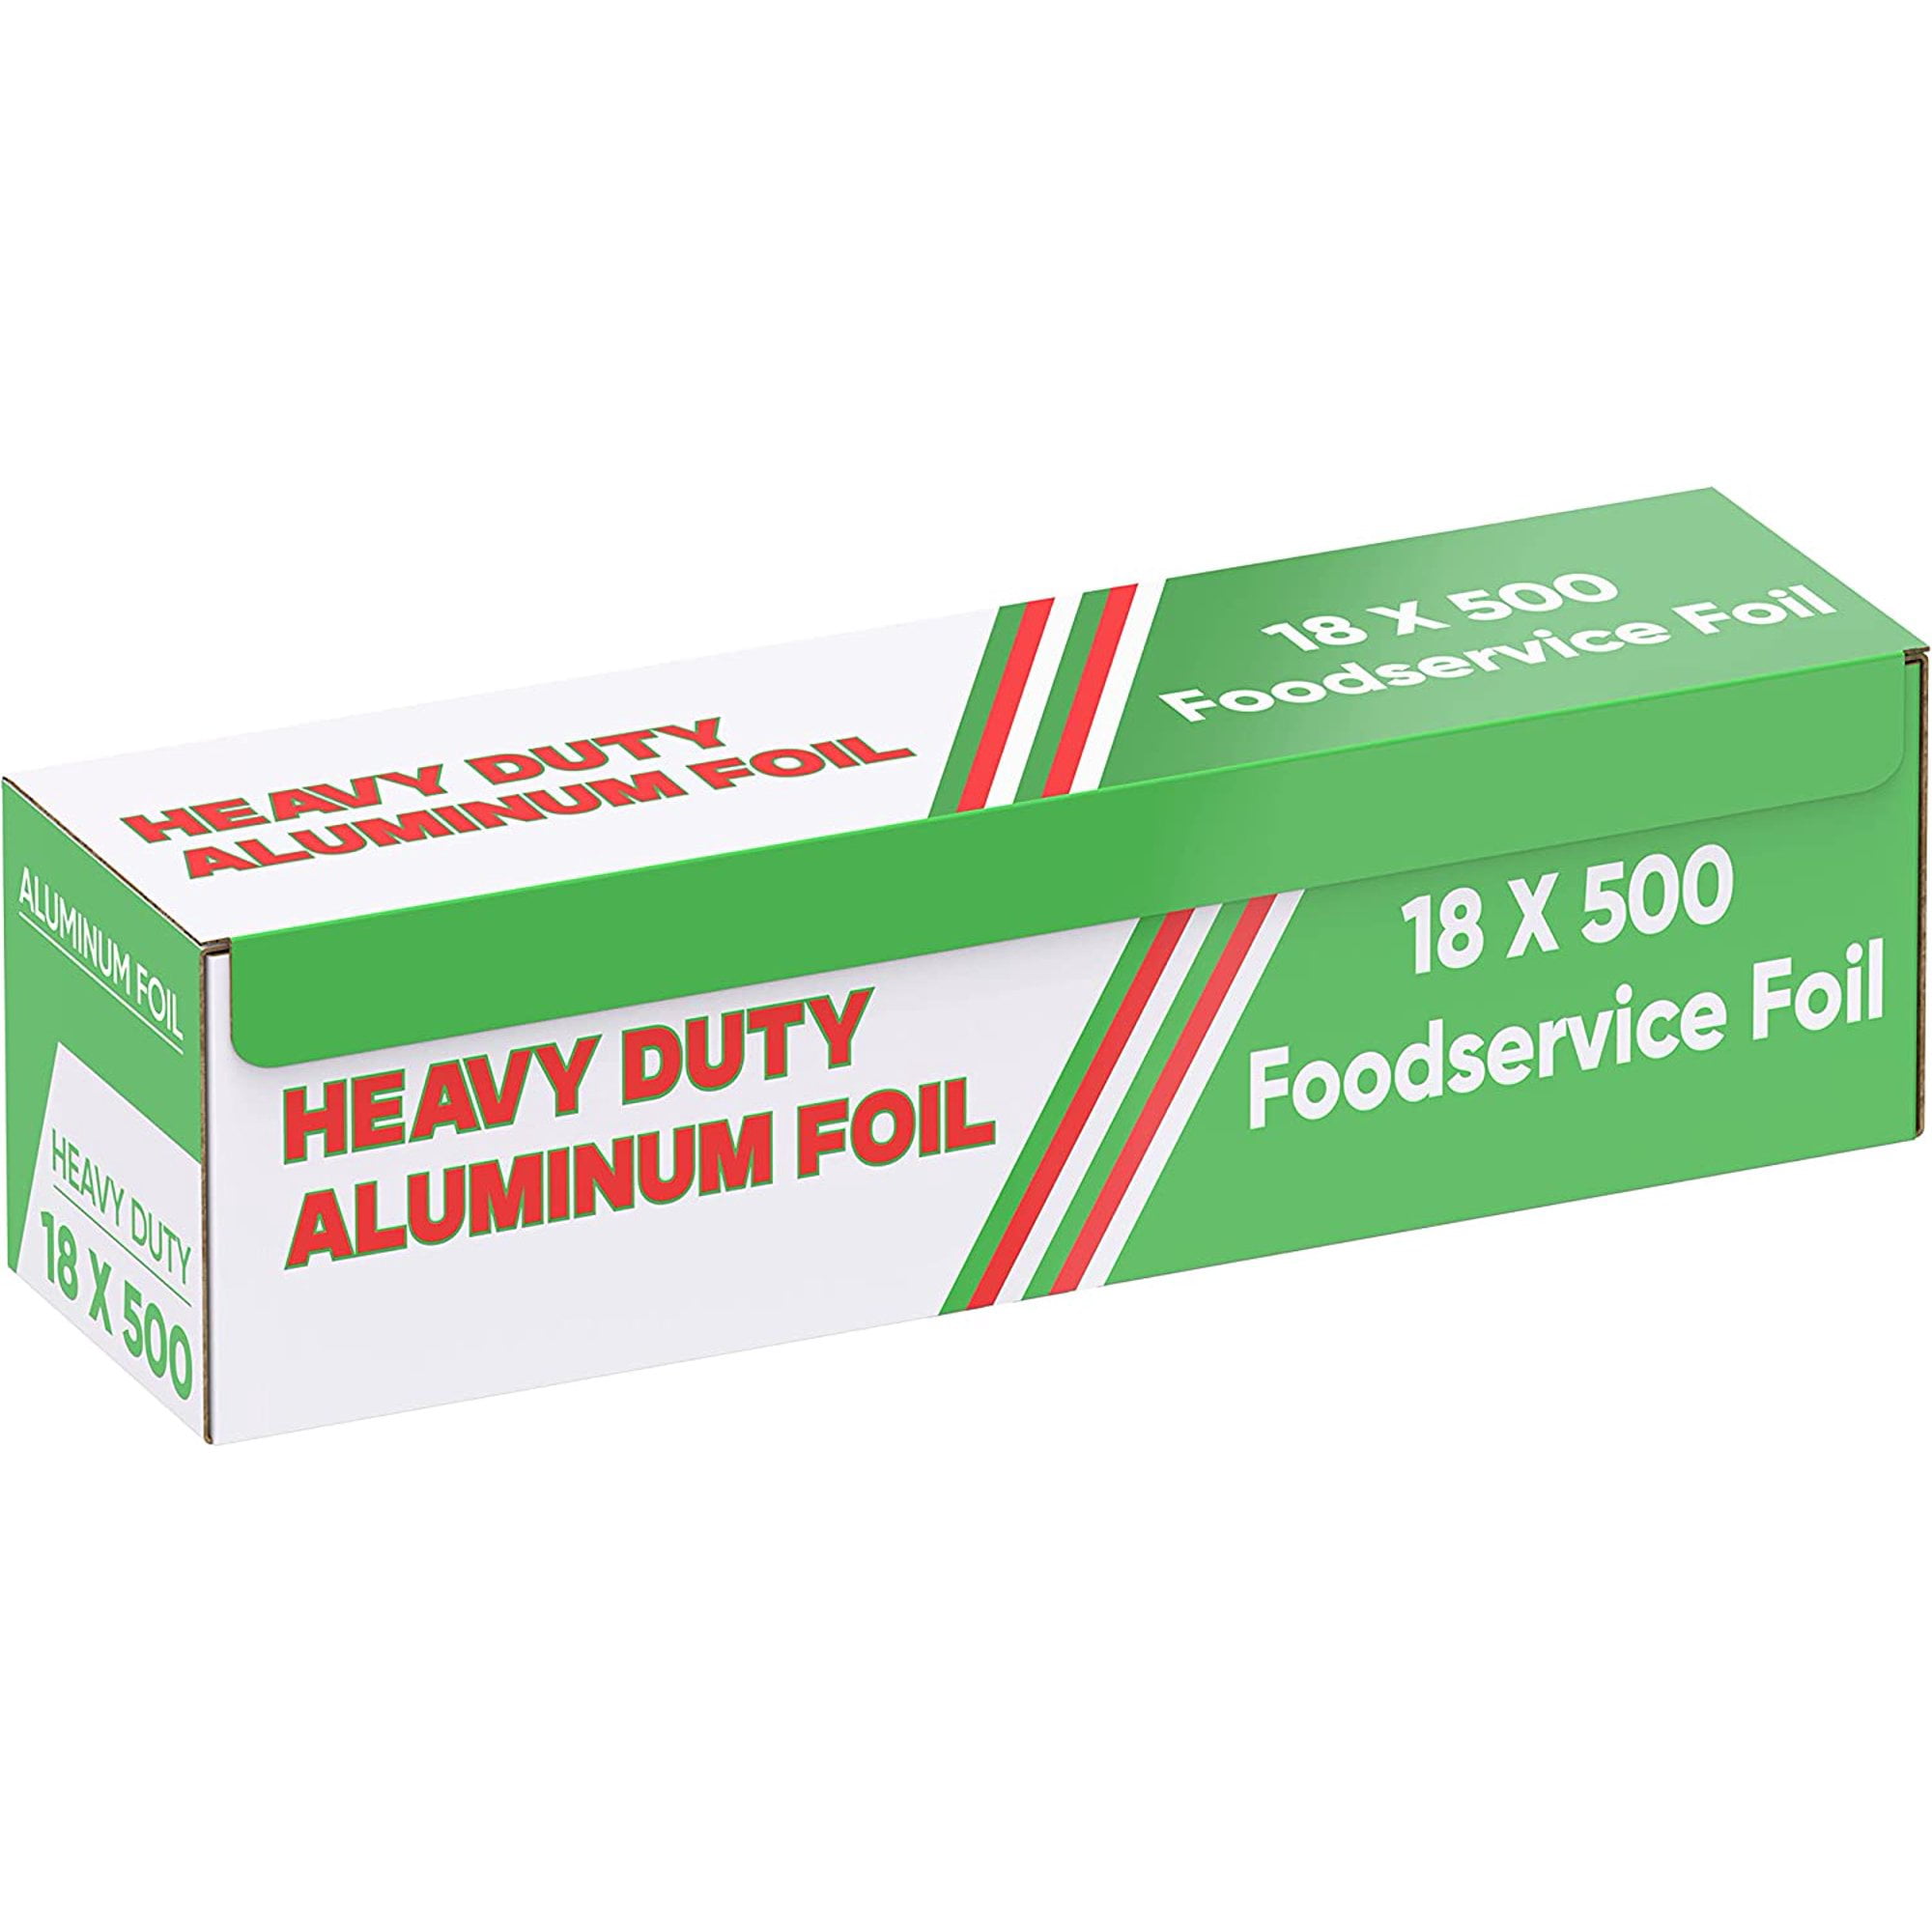 RW Base 12 inch x 500 Feet Aluminum Foil, 500 Oven-Safe Aluminum Foil Roll - Freezer-Safe, Heavy Duty, Silver Aluminum Foil Wrap, with Cutter, for Foo